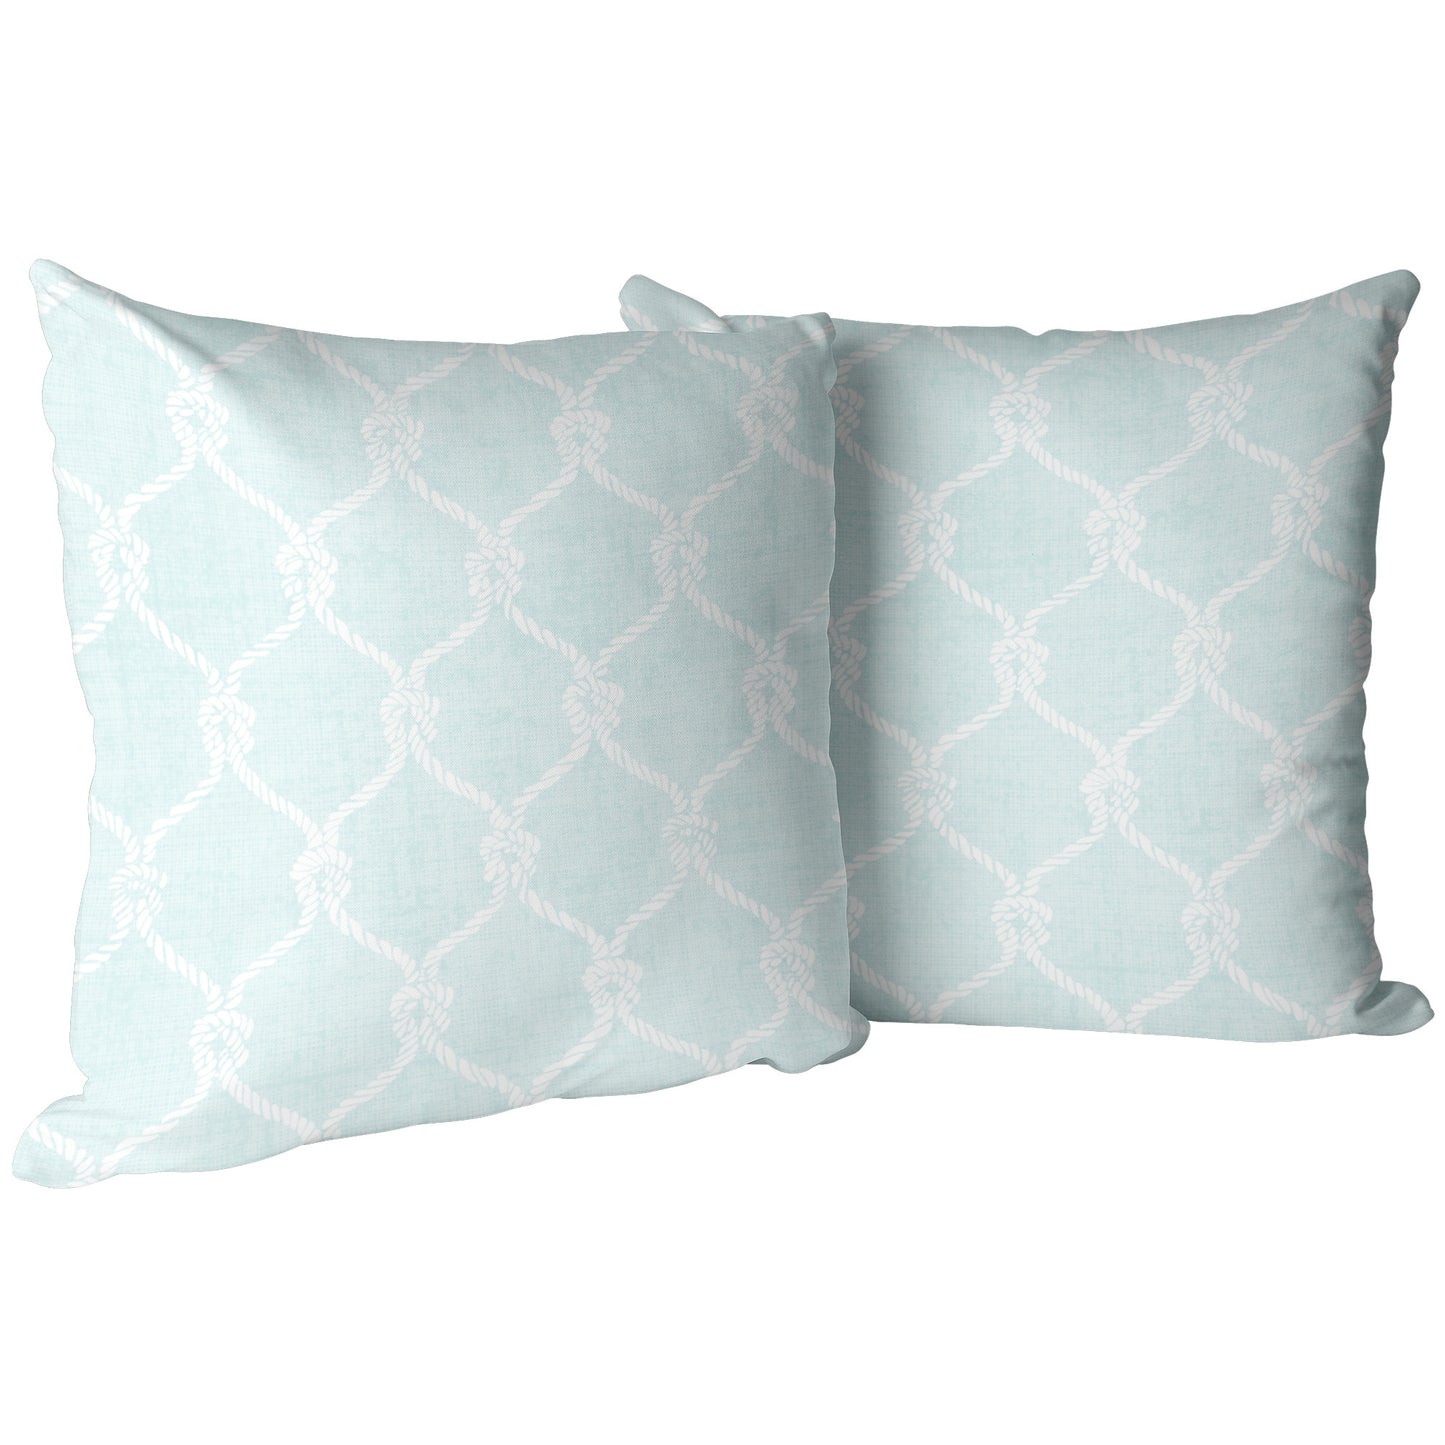 Nautical Netting Design on Mist Linen Textured Background, Throw Pillow